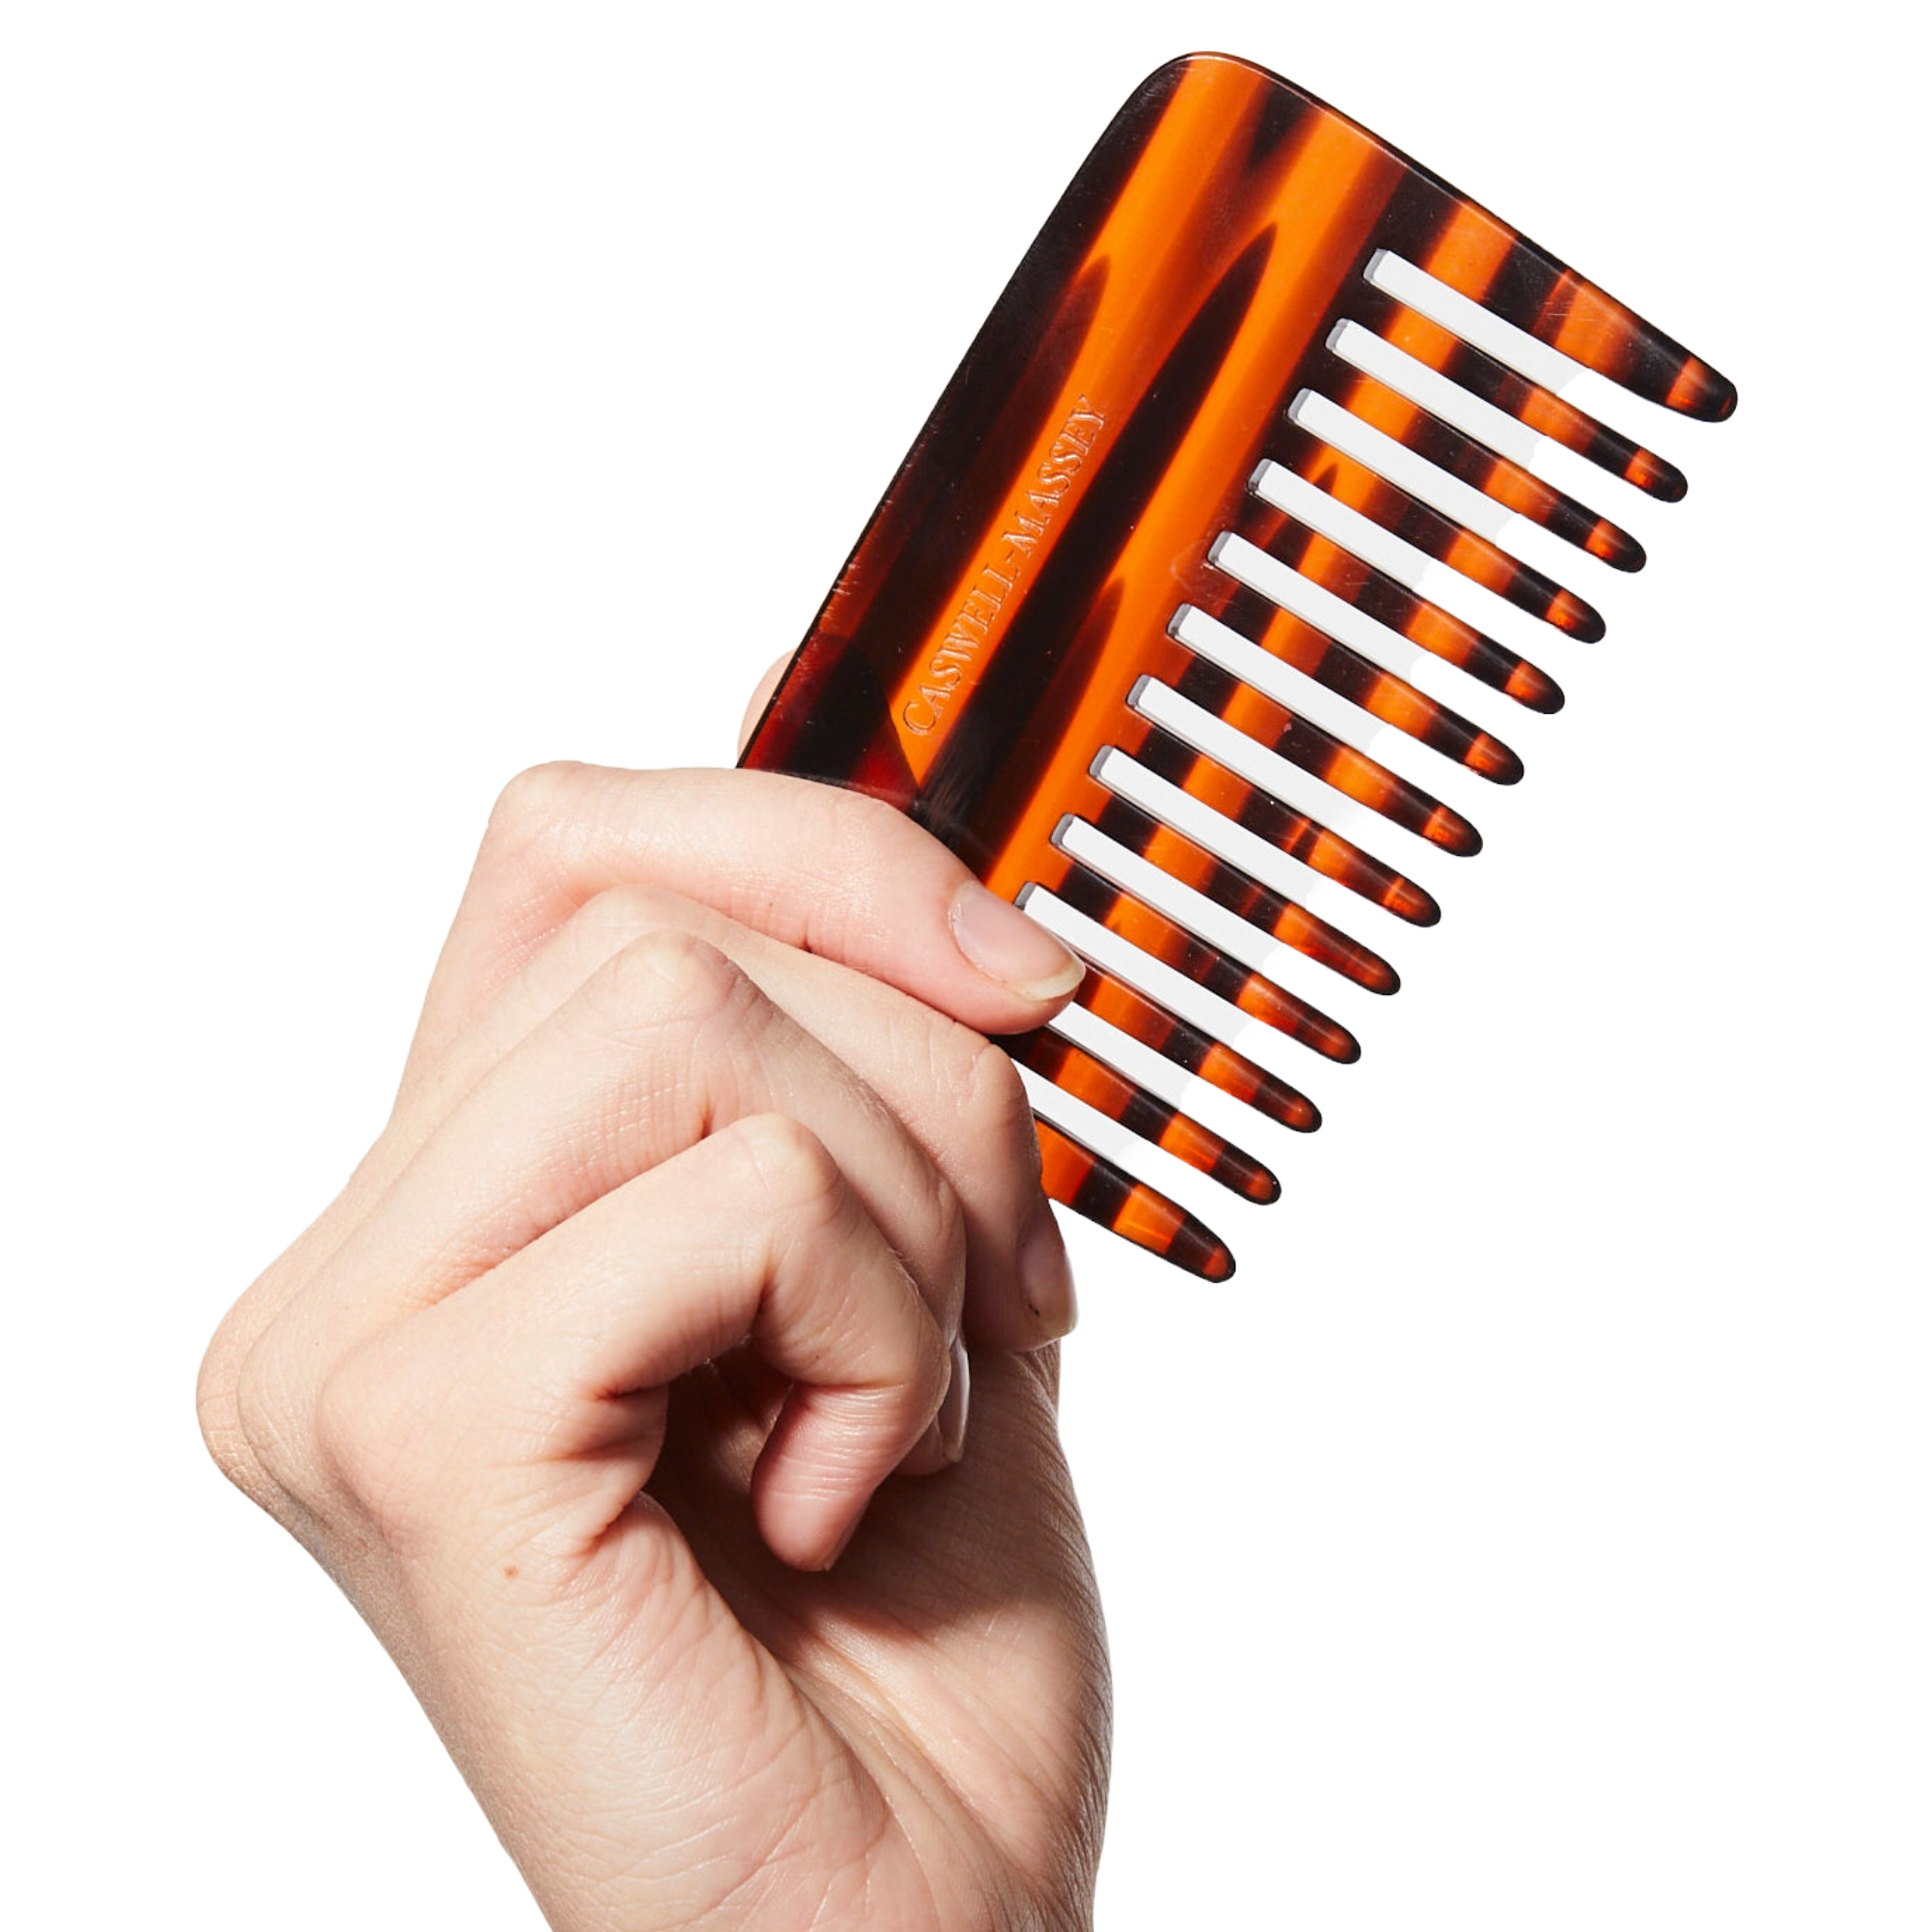 Caswell-Massey Travel Detangler Comb shown in hand